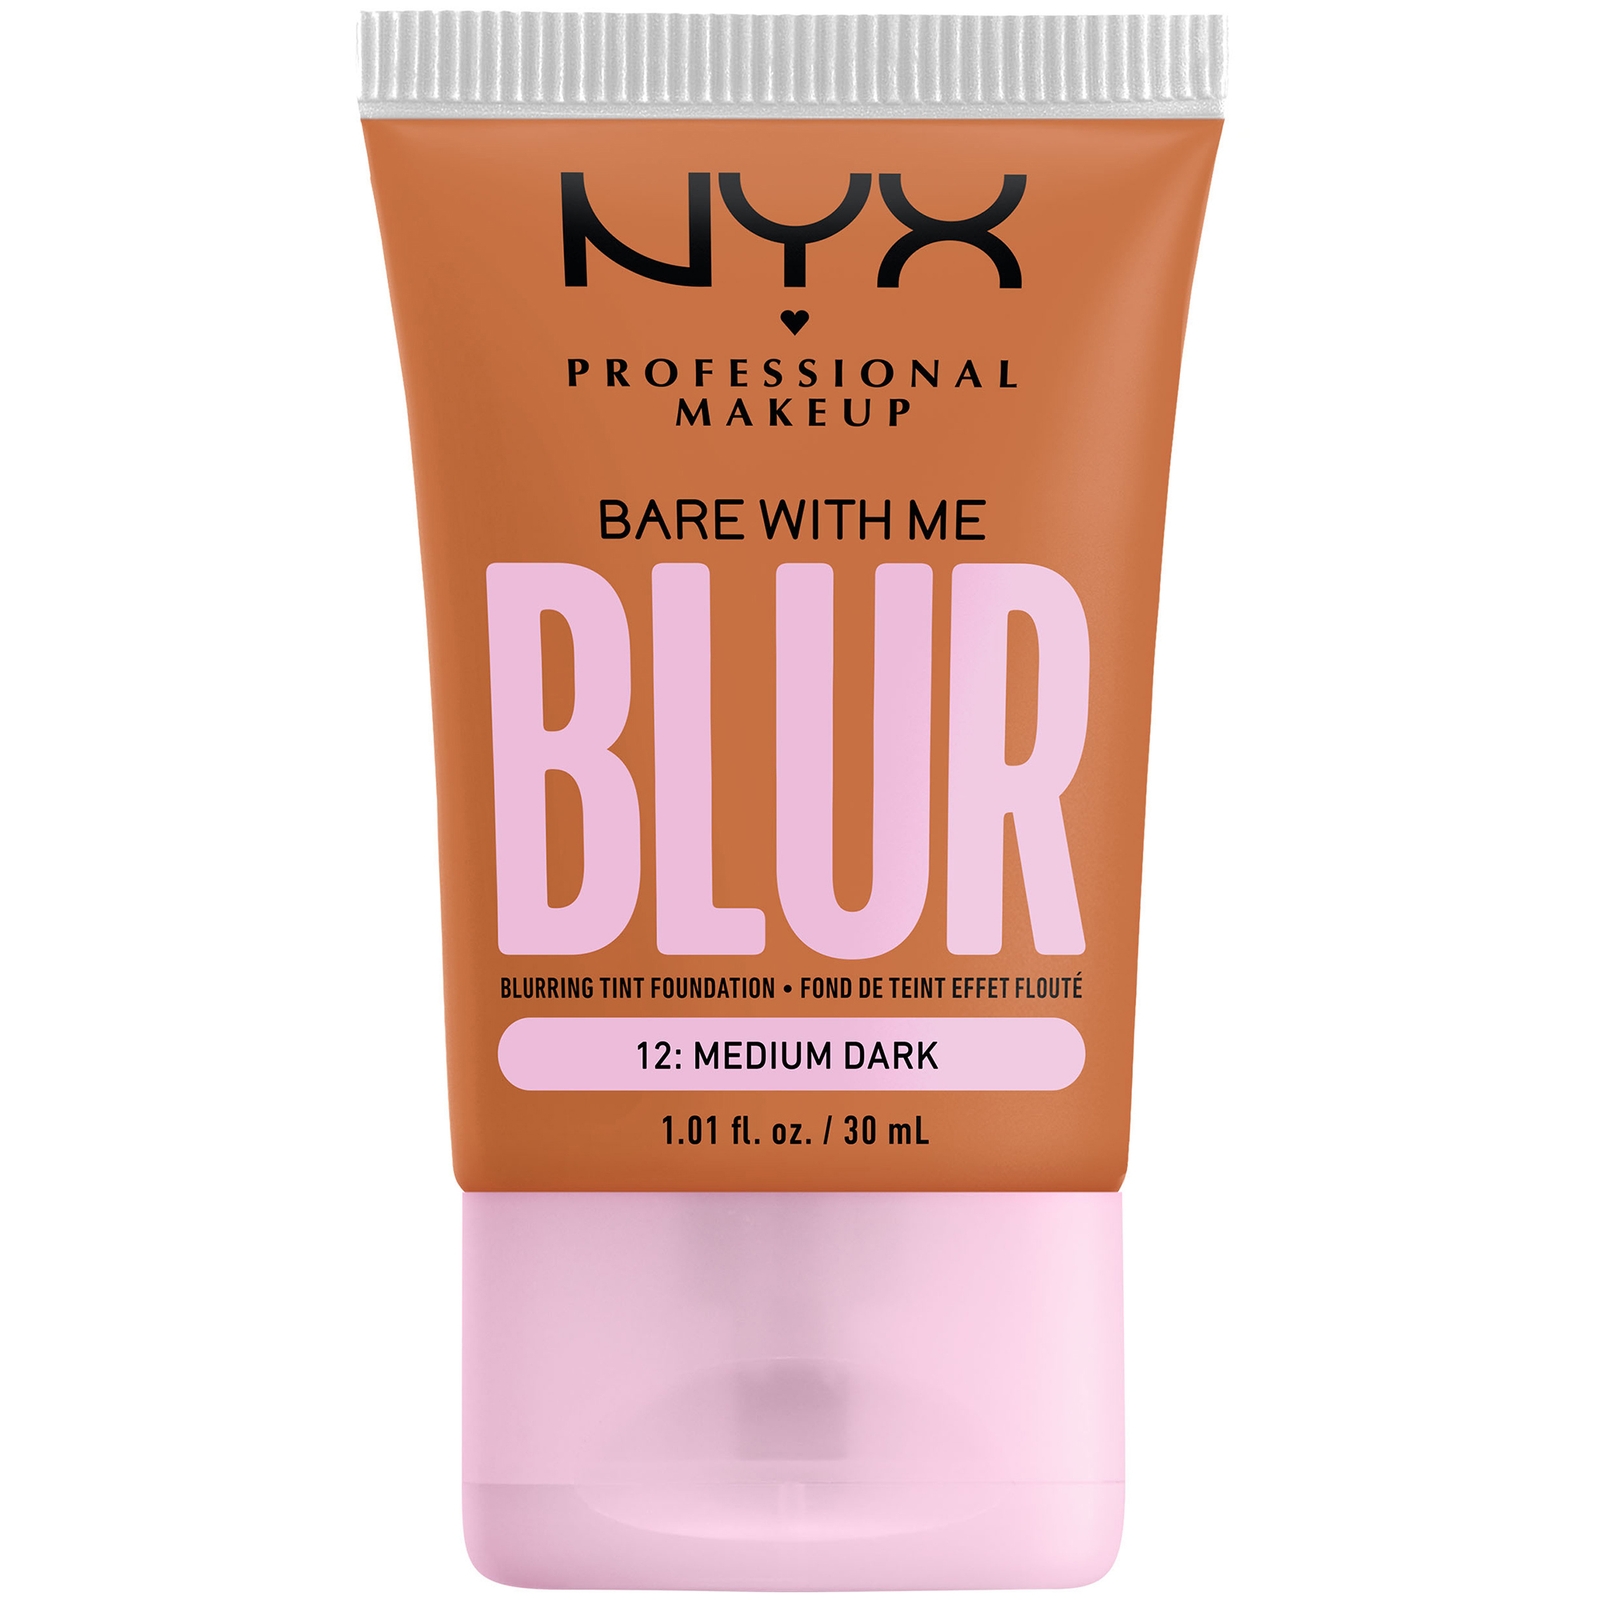 Nyx Professional Makeup Bare With Me Blur Tint Foundation 30ml (varios Shades) - Medium Dark In White